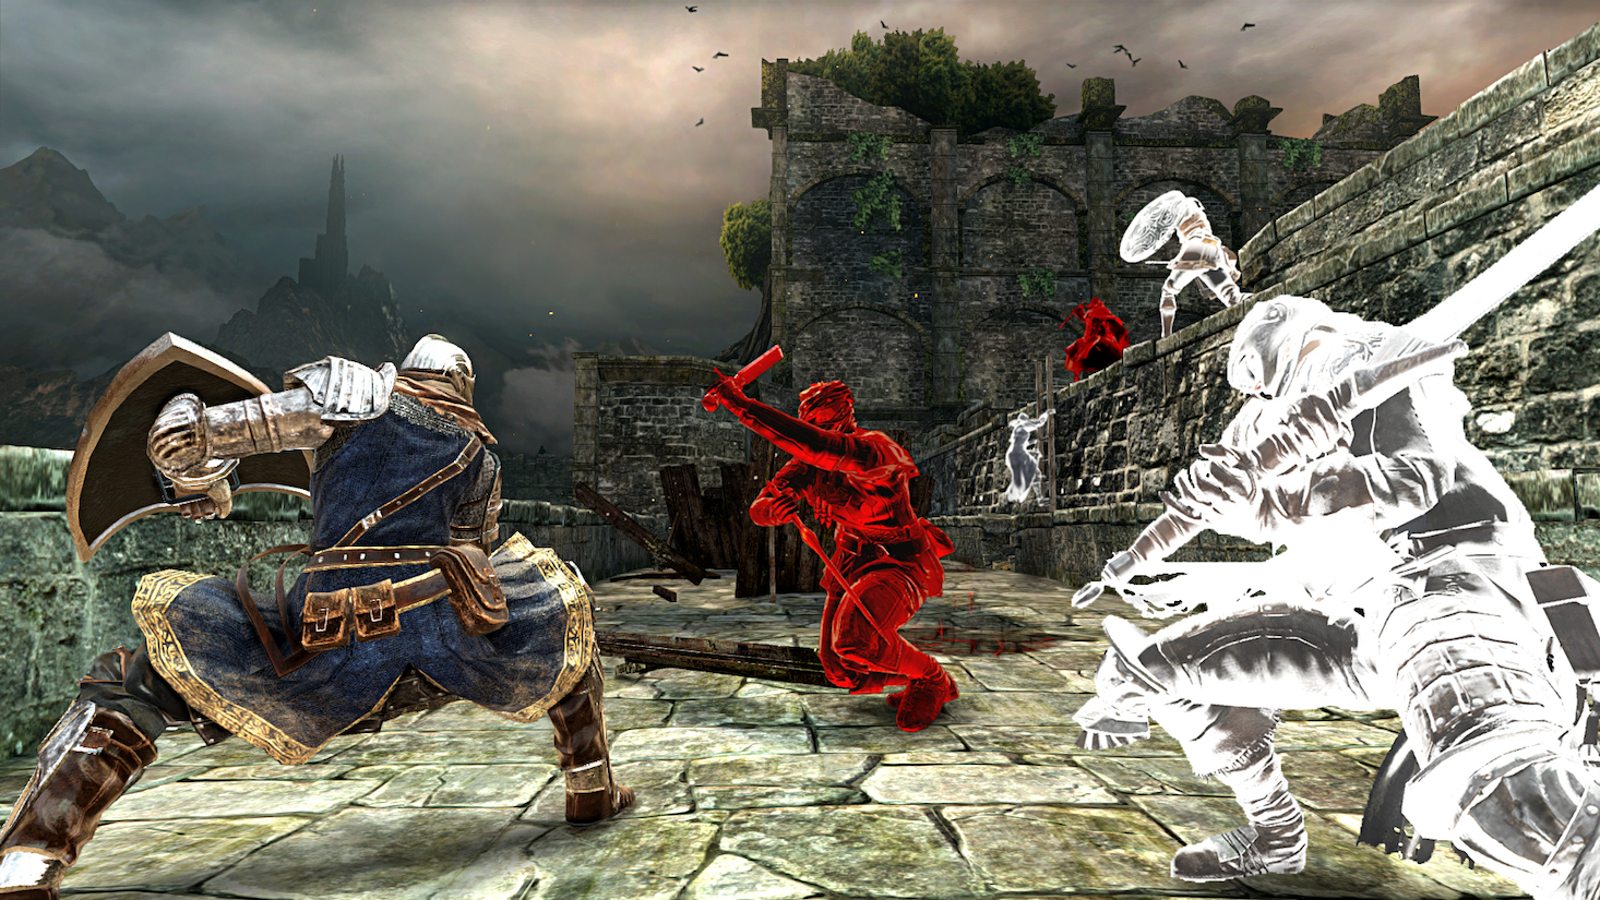 Dark Souls 2: Scholar Of The First Sin's online features have been restored